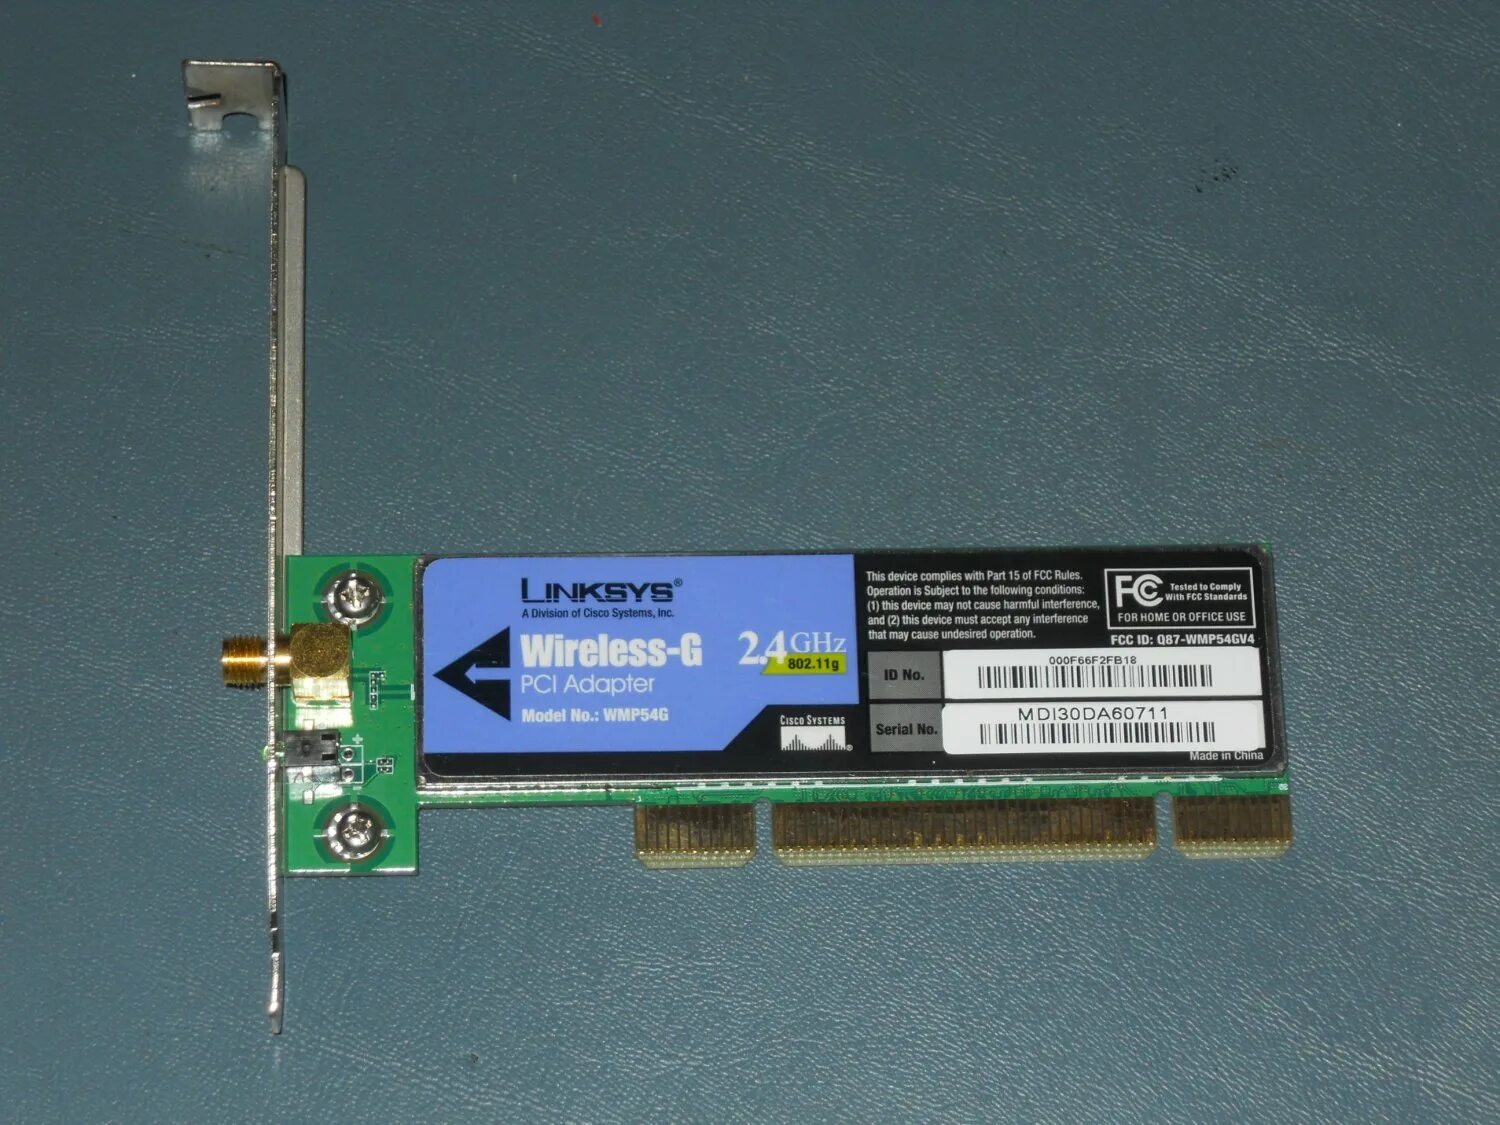 2.4 g driver купить. Linksys Wireless-g PCI Adapter. Linksys wmp54g. PCI блютуз адаптер. Полная характеристика Linksys Wireless g USB Network Adapter.